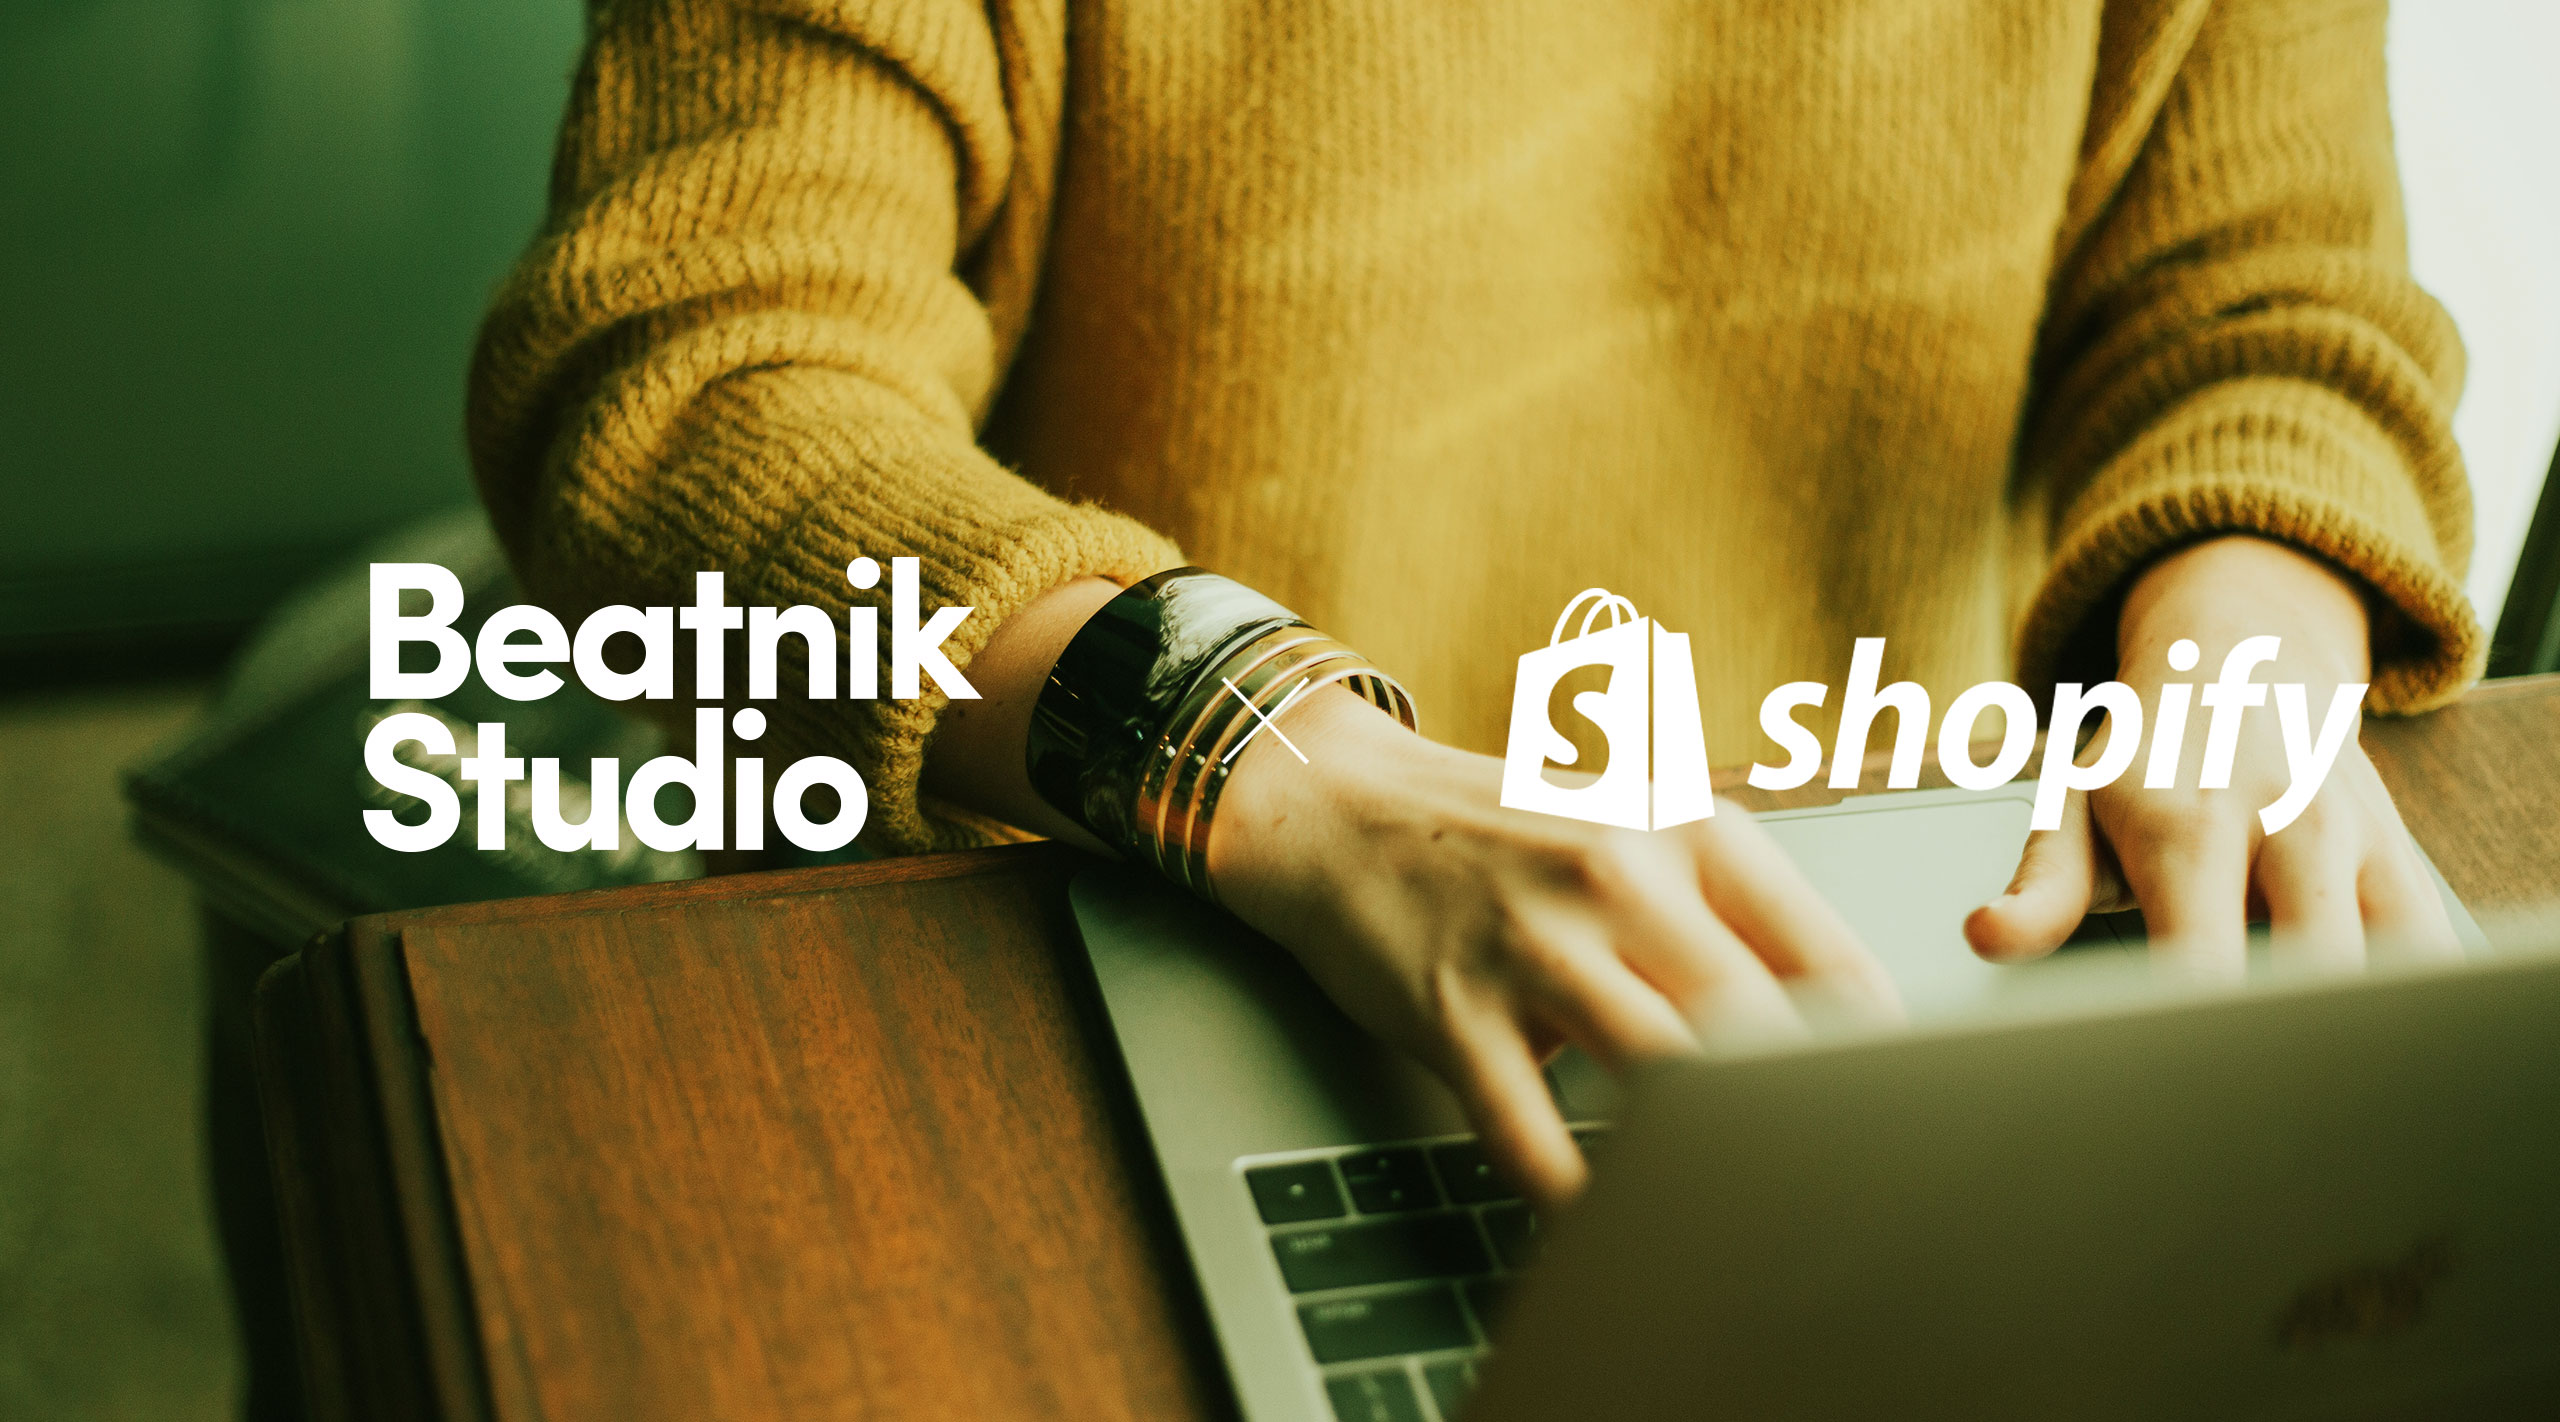 Beatnik Studio Shopify Partner